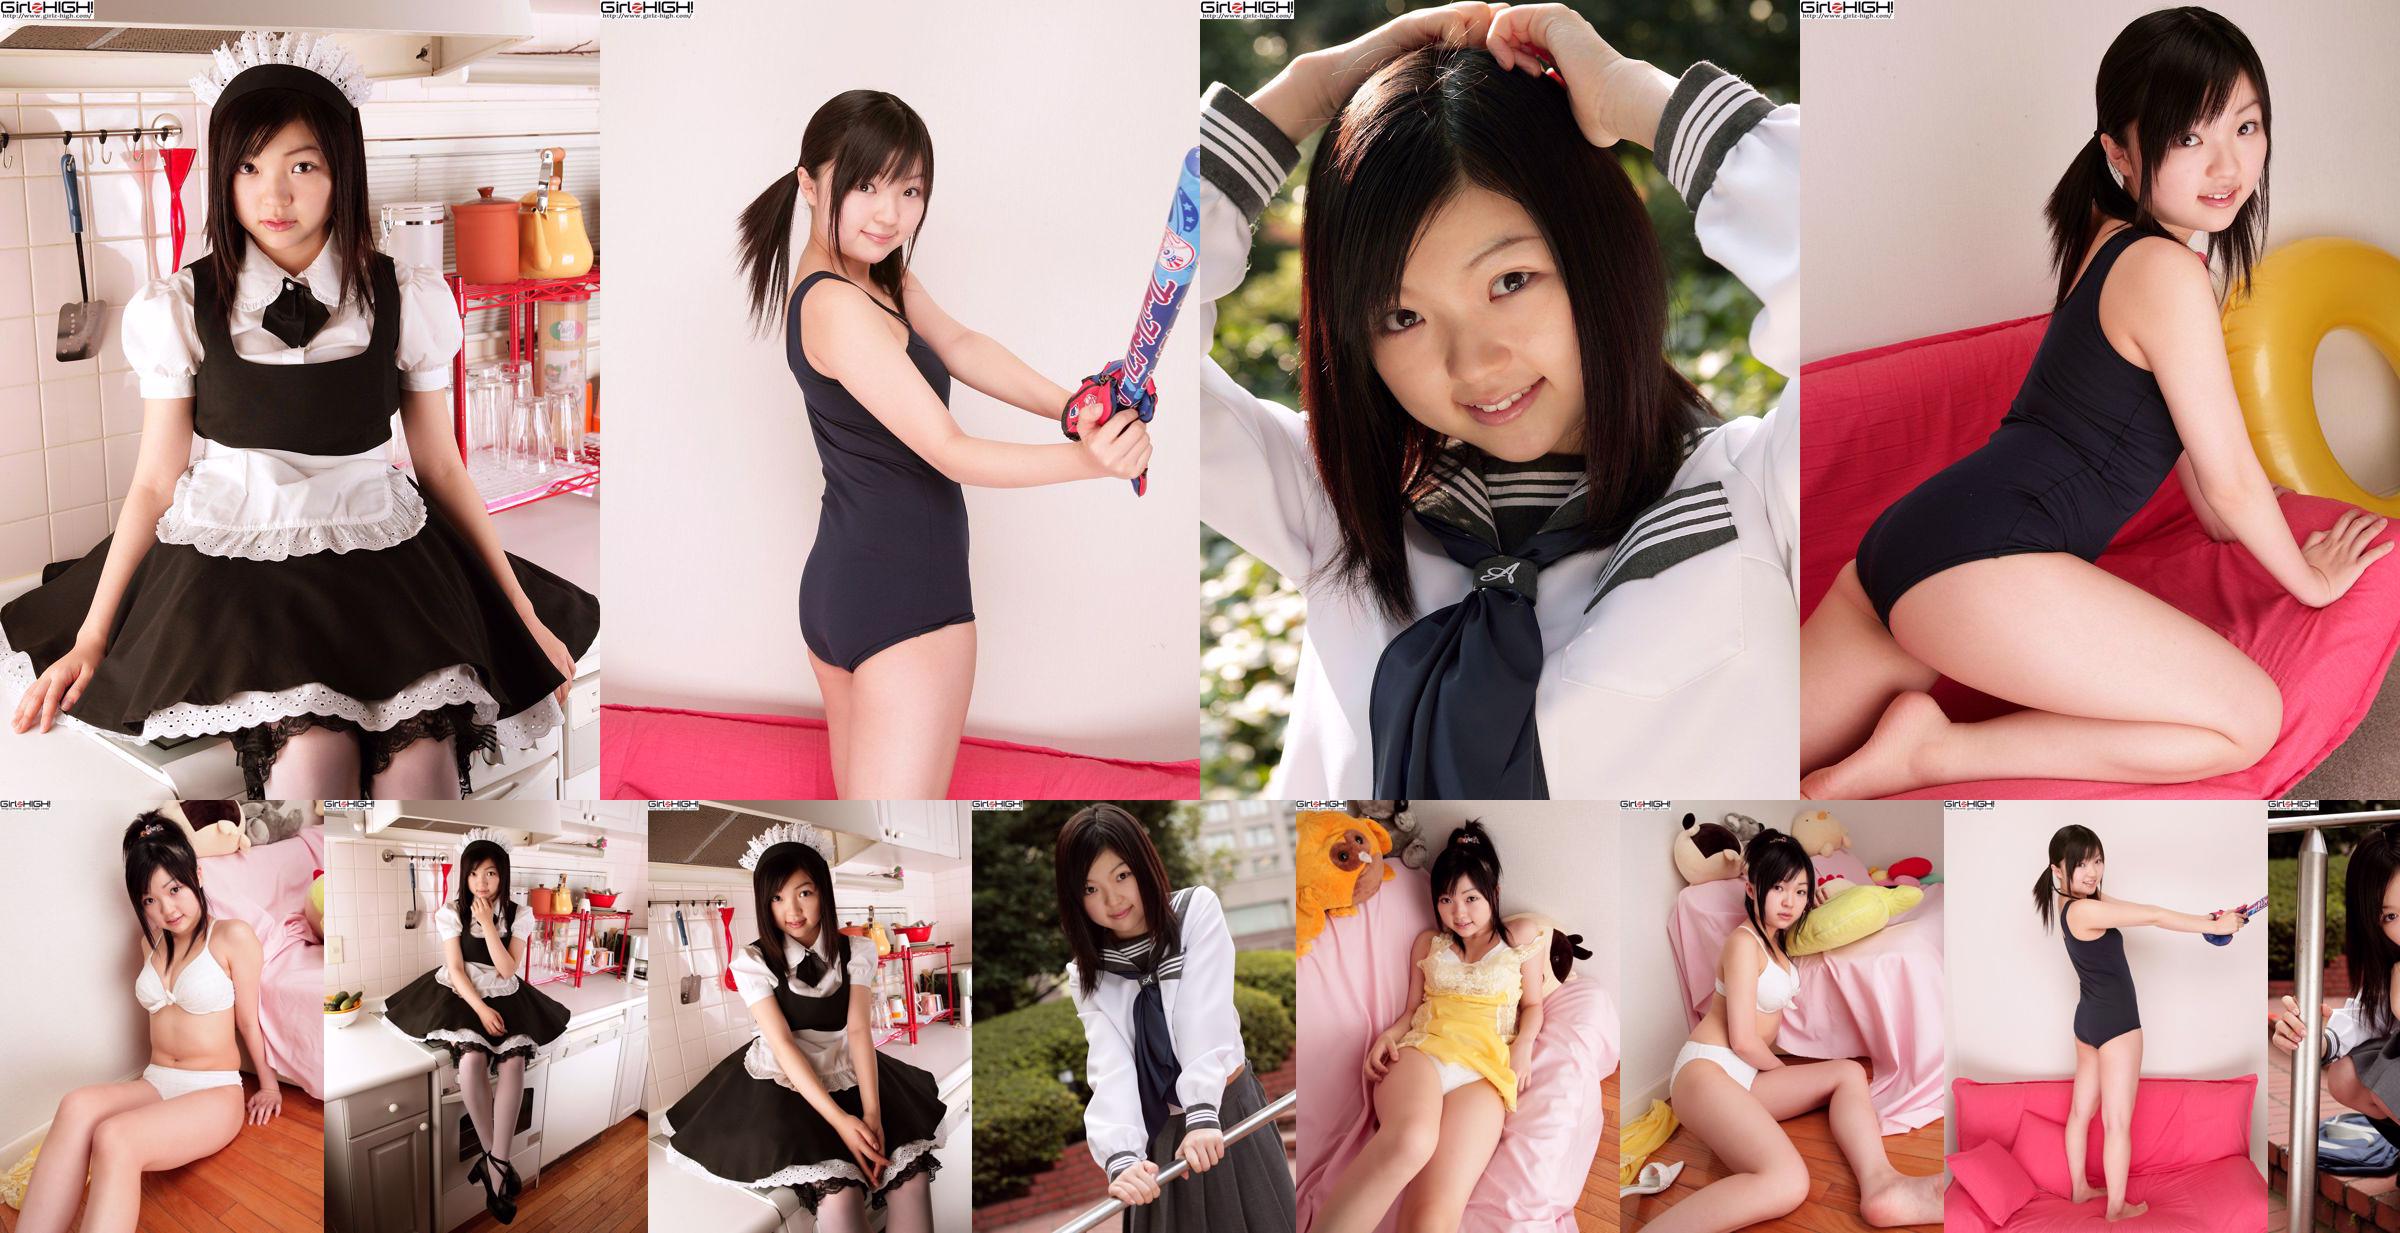 [Girlz-High] Misaki Moe Gravure Gallery-g074 Photoset 03 No.3c5a93 Page 1